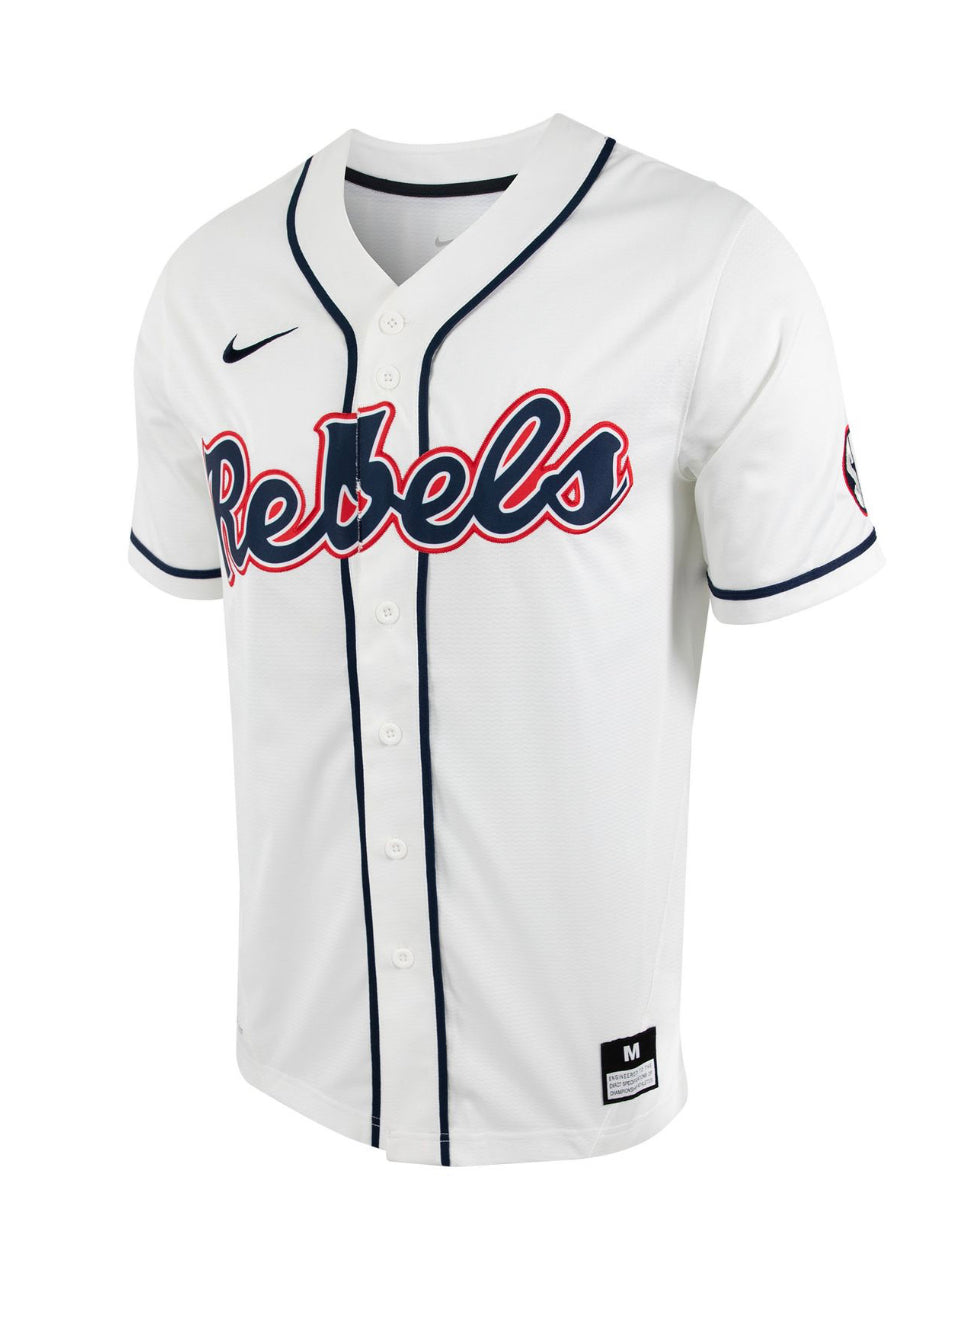 Rebels Baseball Jersey